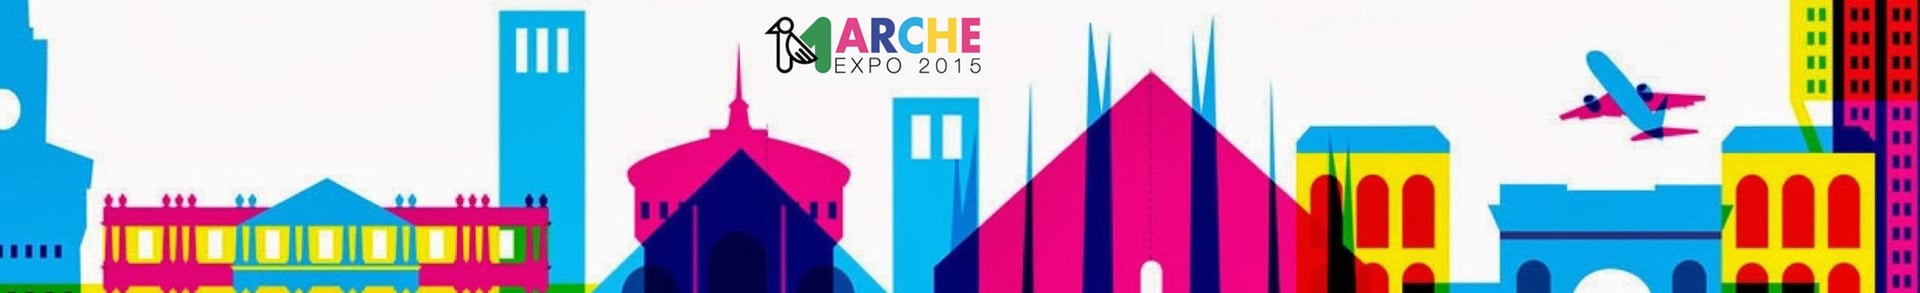 MarchExpo 2015 @ showroom Elica